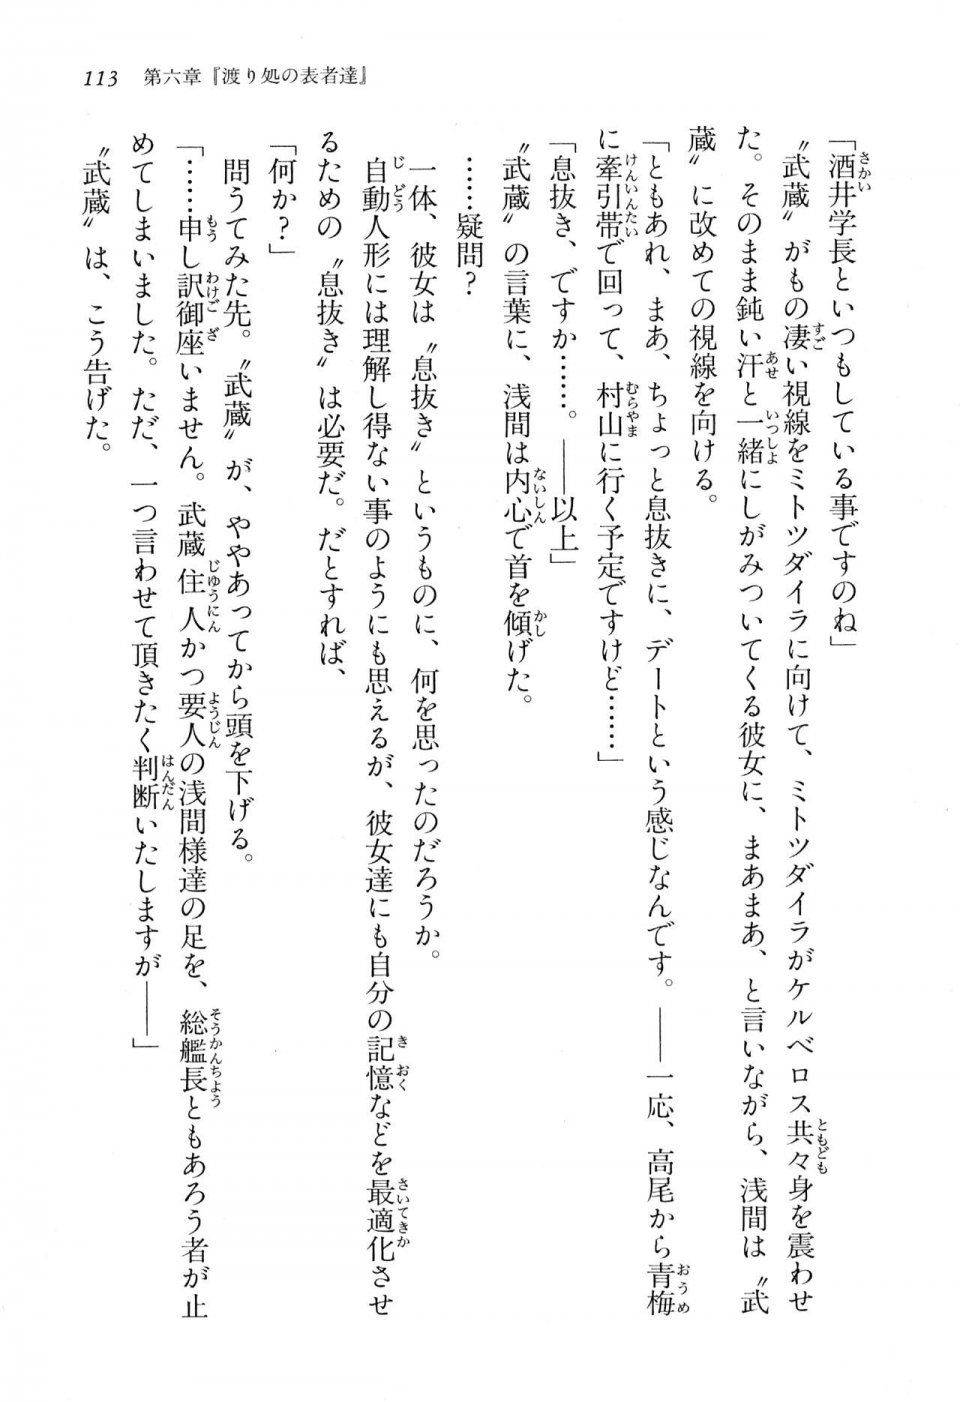 Kyoukai Senjou no Horizon BD Special Mininovel Vol 2(1B) - Photo #117